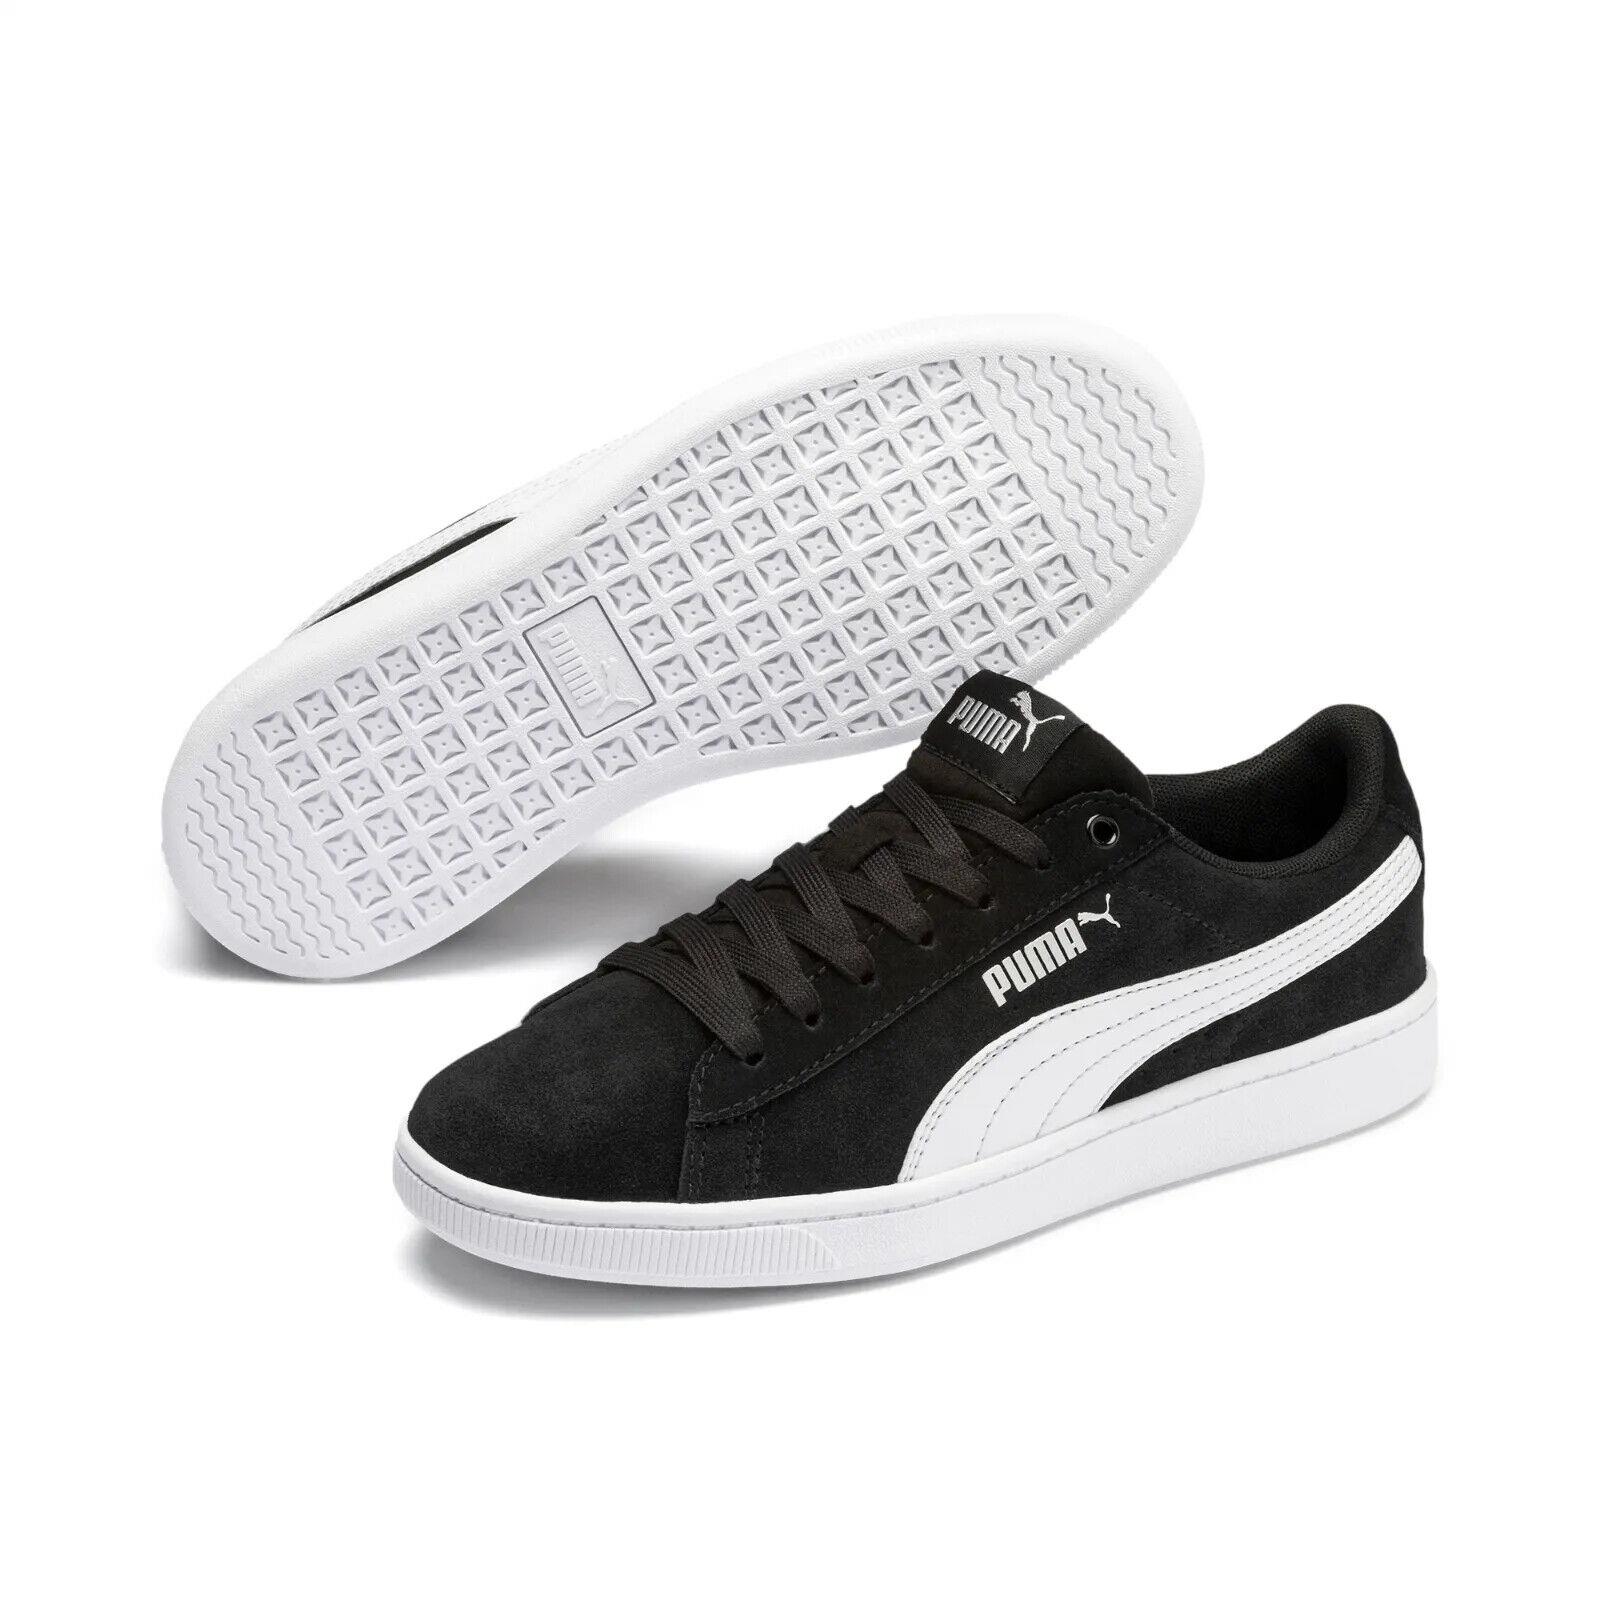 Puma Suede v2 Distinct Life 364826-01 Men`s White/black Sneakers Shoes 12 WR219